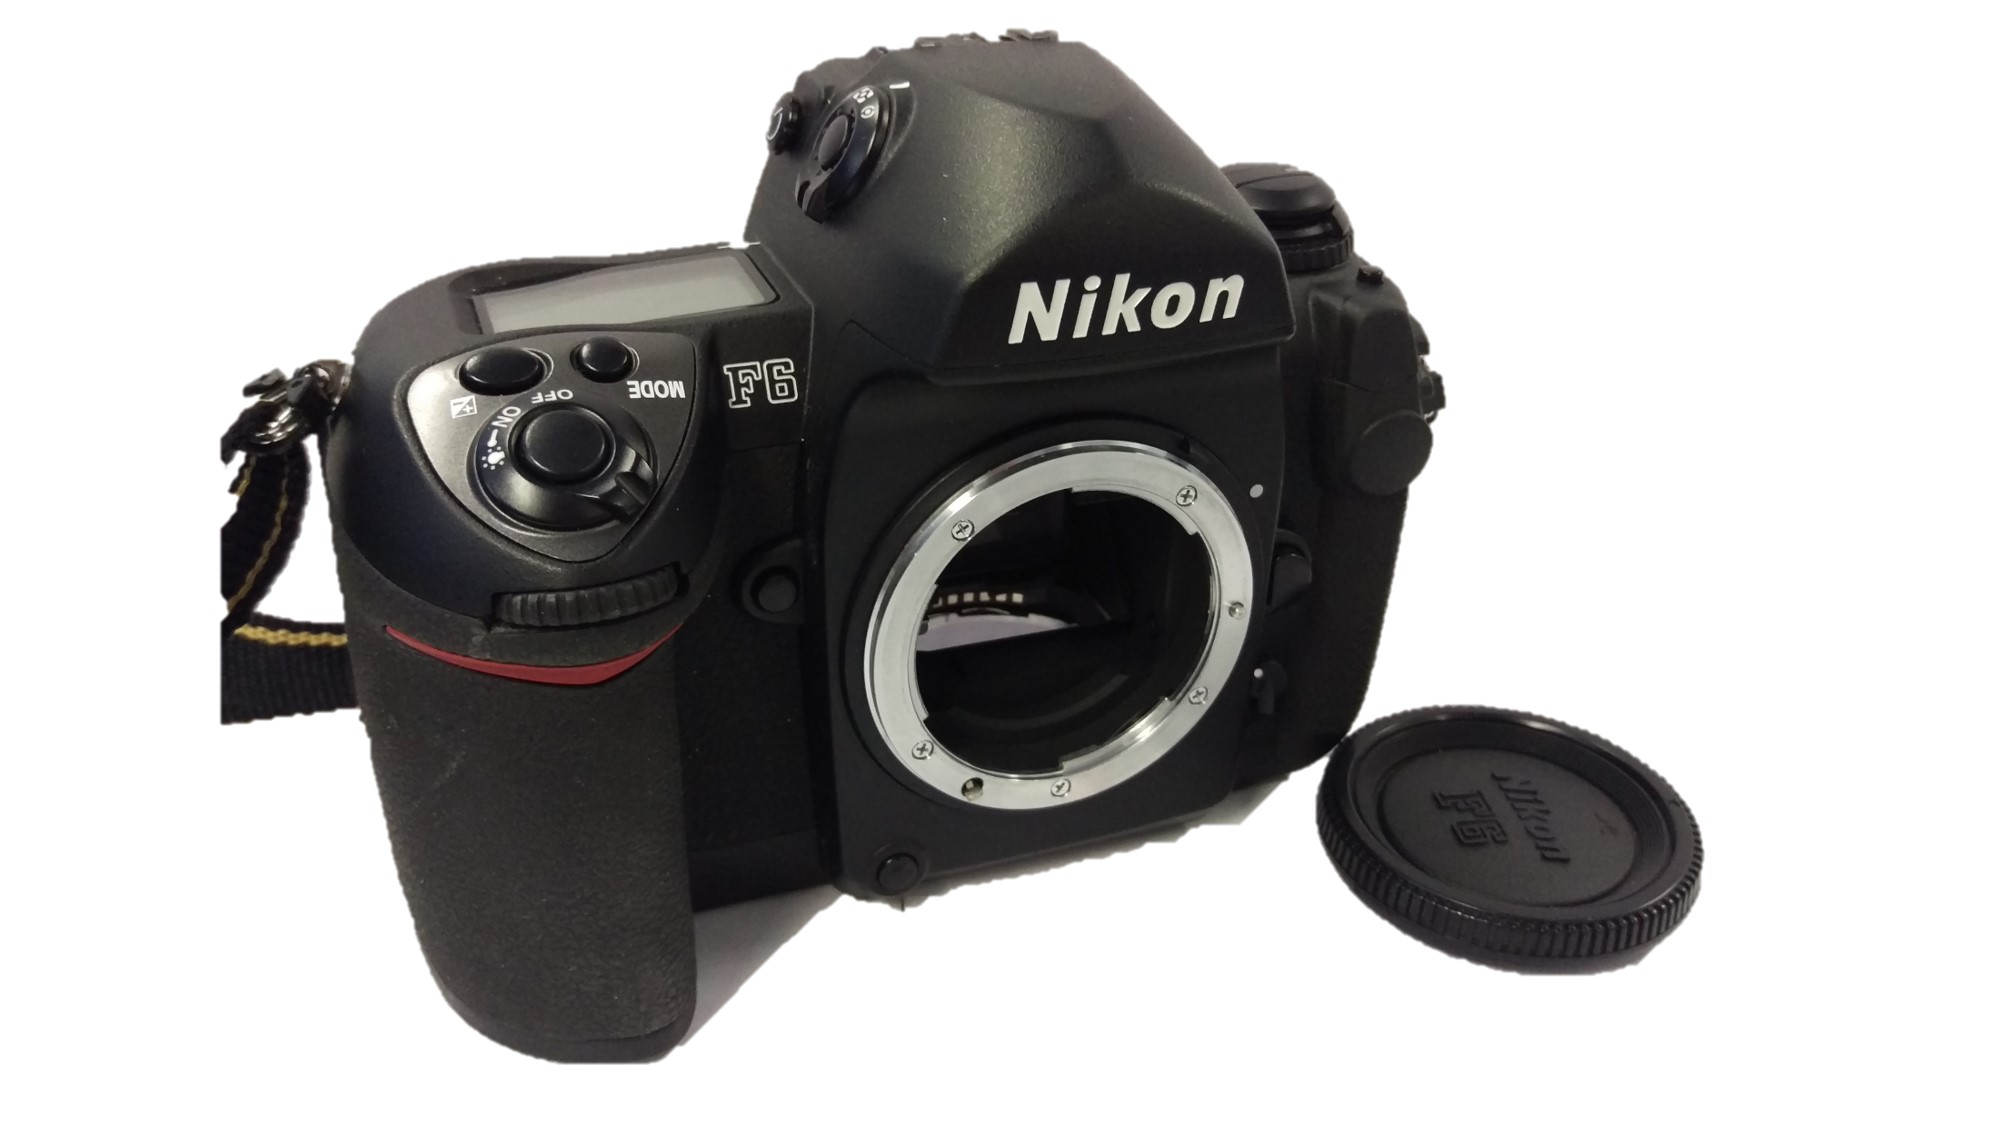 【Nikon:F6】のカメラ出張買取実績